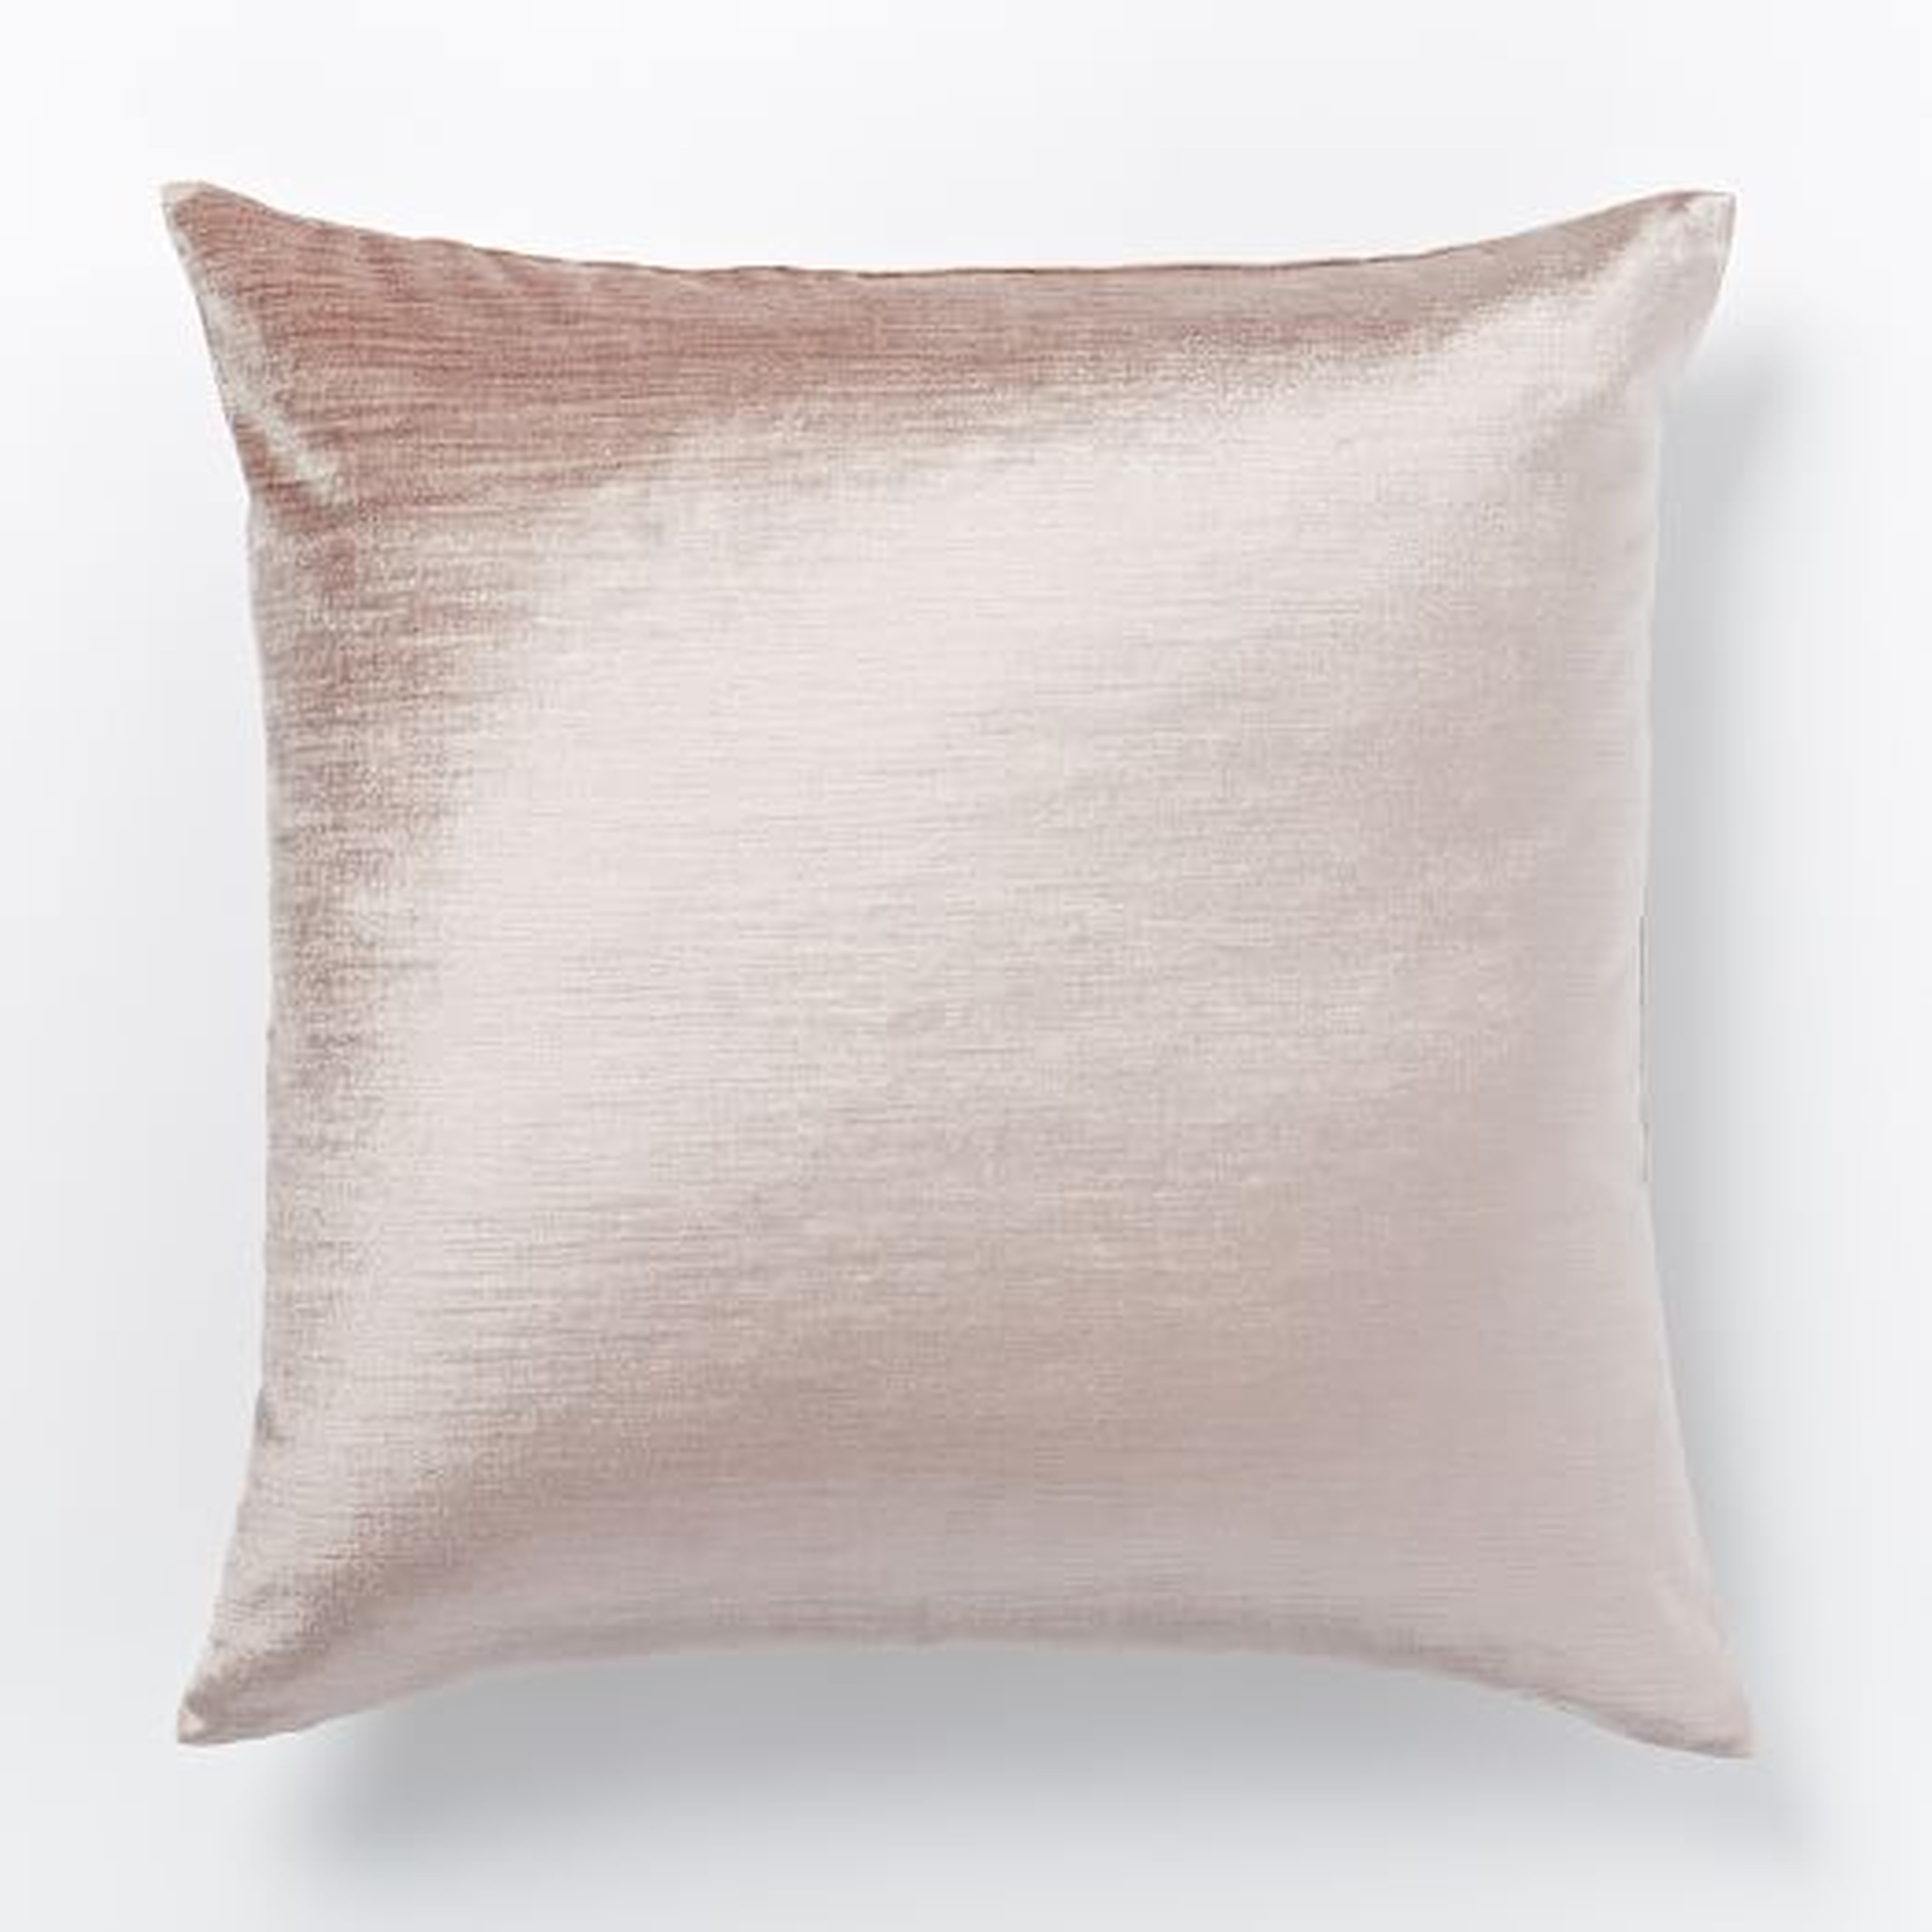 Cotton Luster Velvet Pillow Cover - Dusty Blush - 20" x 20" - No Insert - West Elm